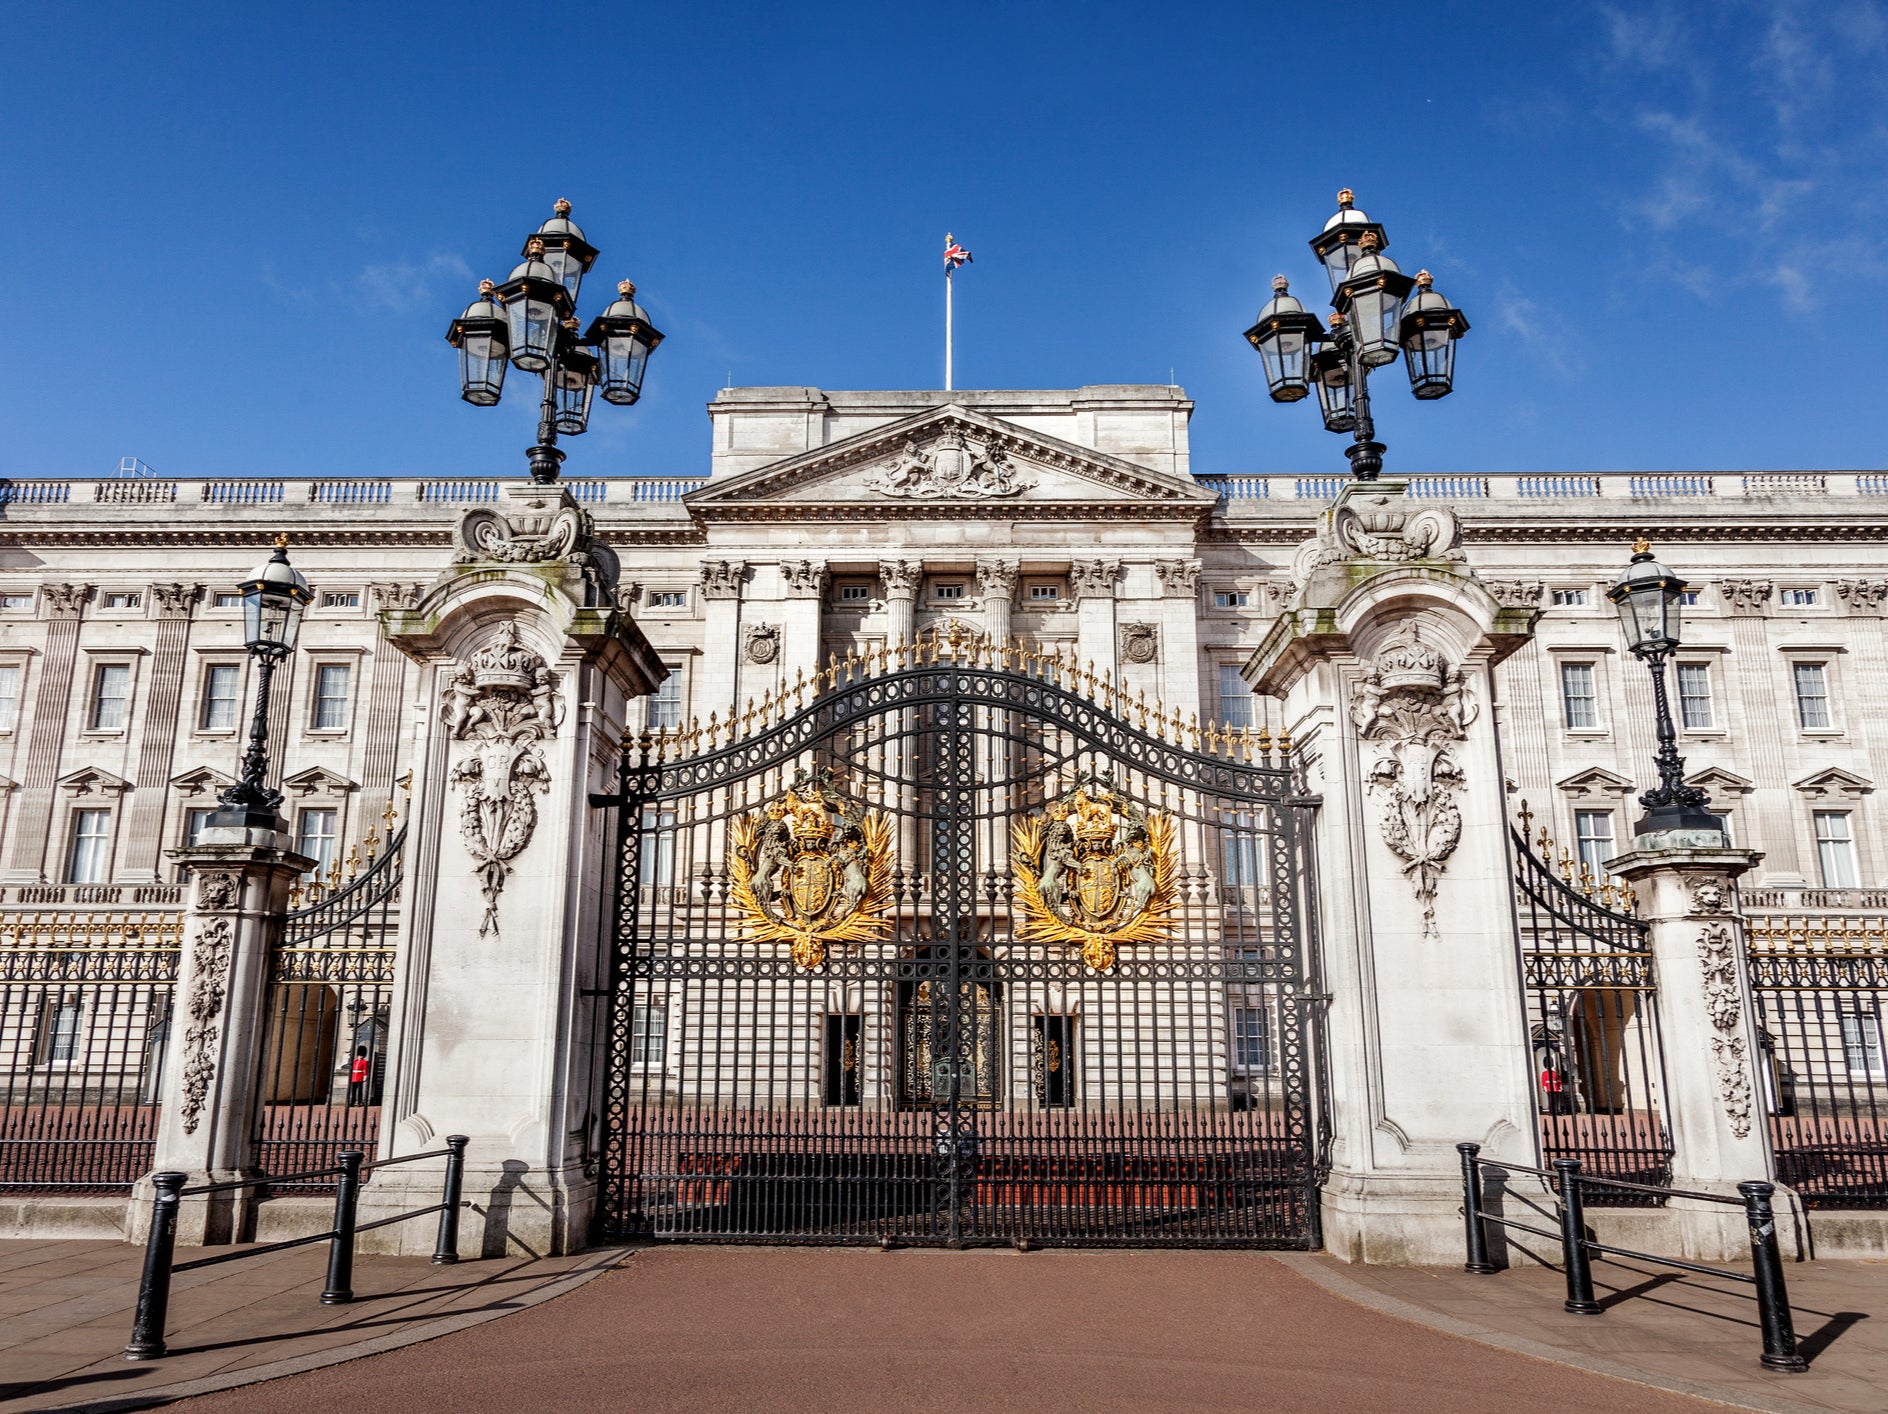 Buckingham Palace: the saddest building in London?